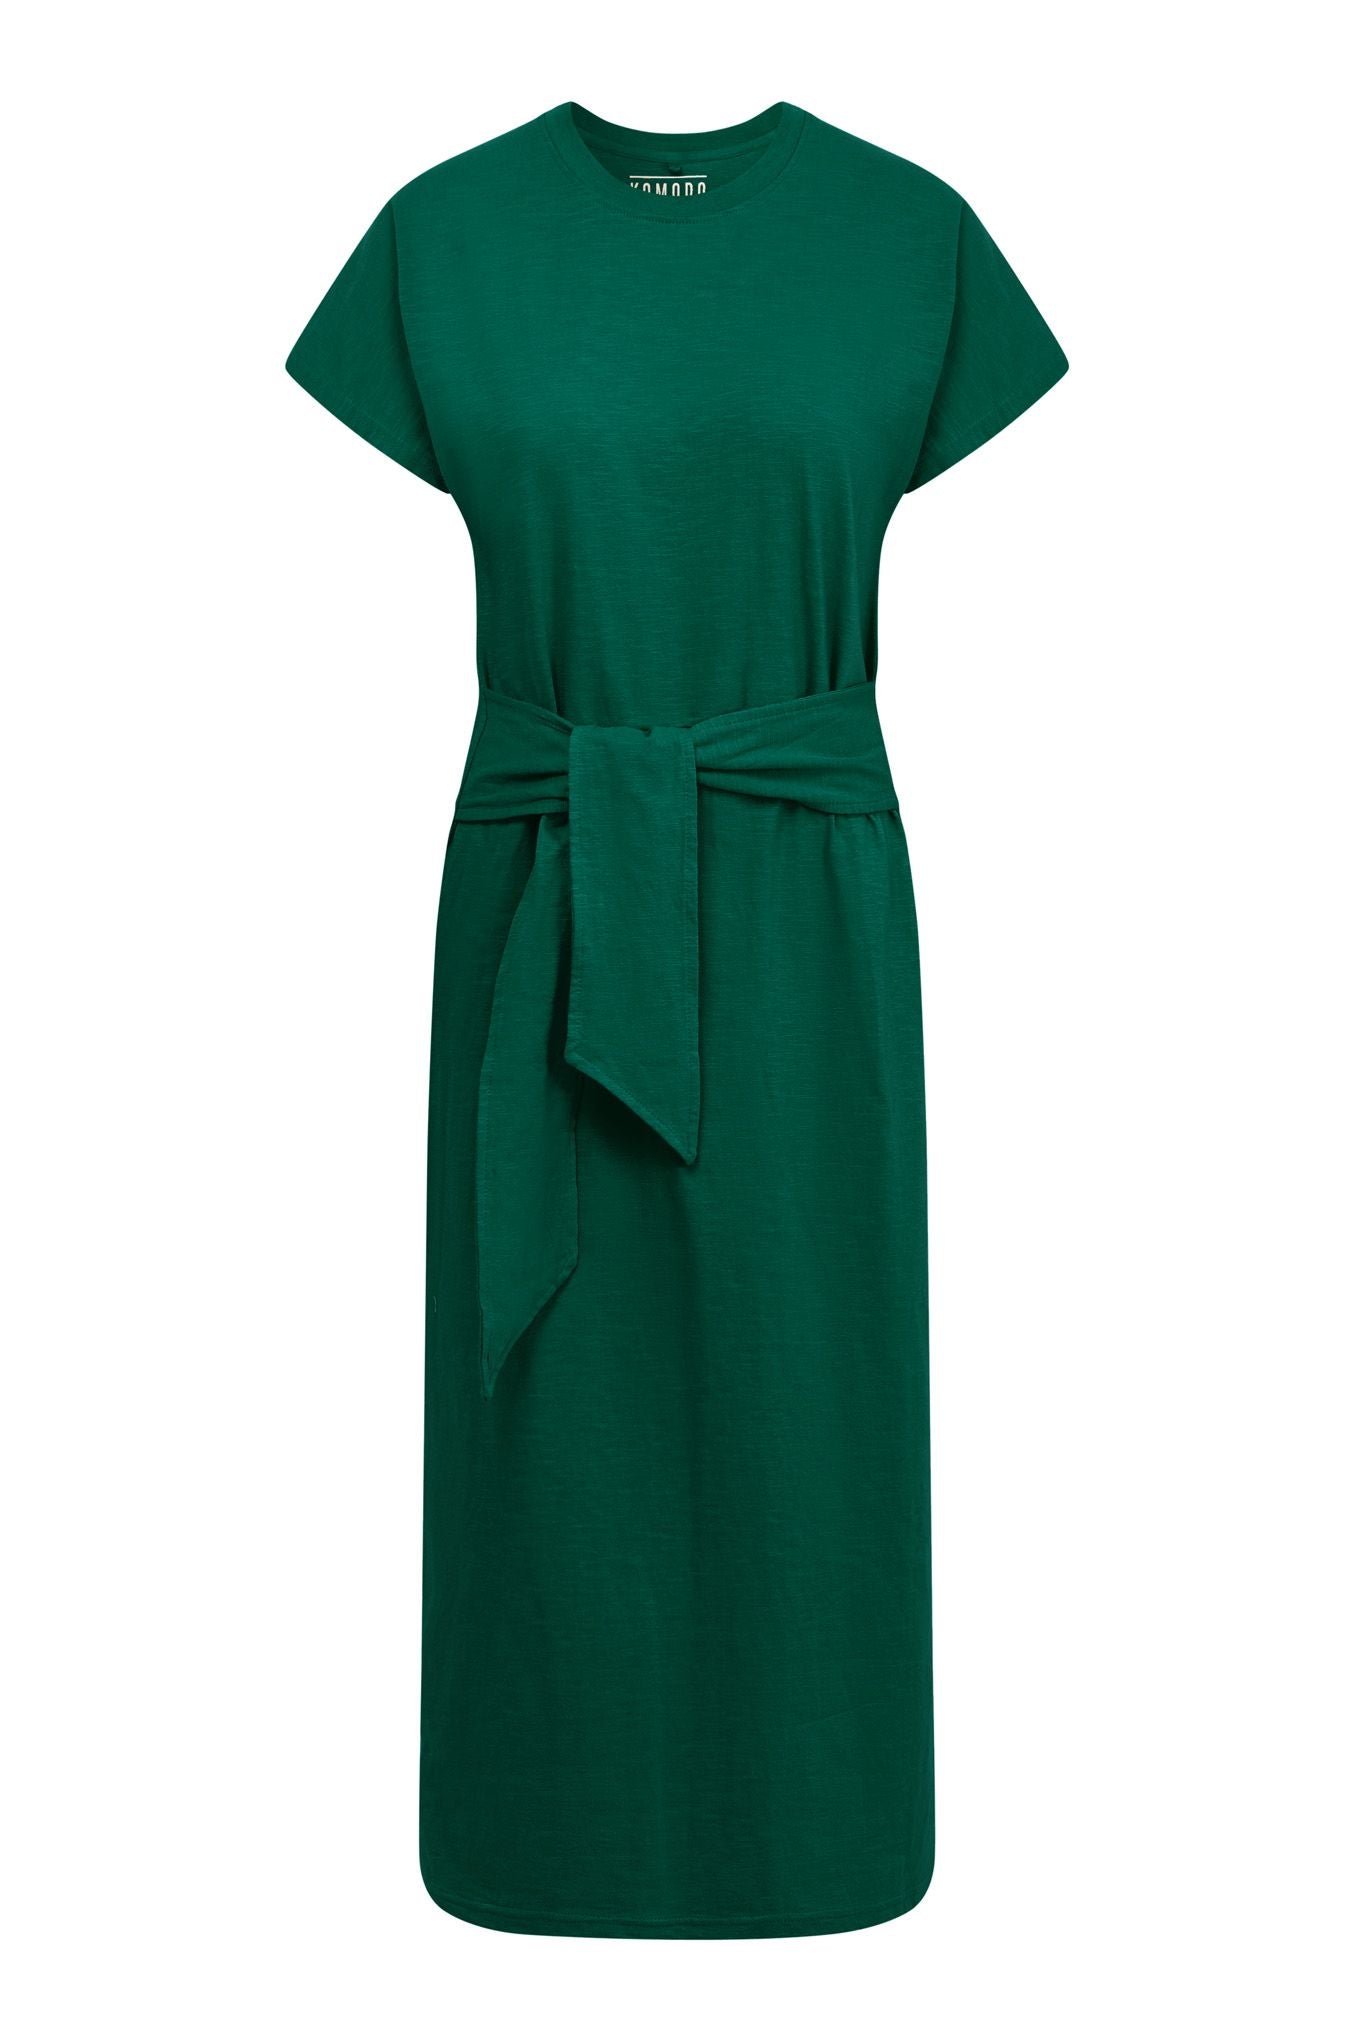 FONDA Organic Cotton Dress - Teal Green